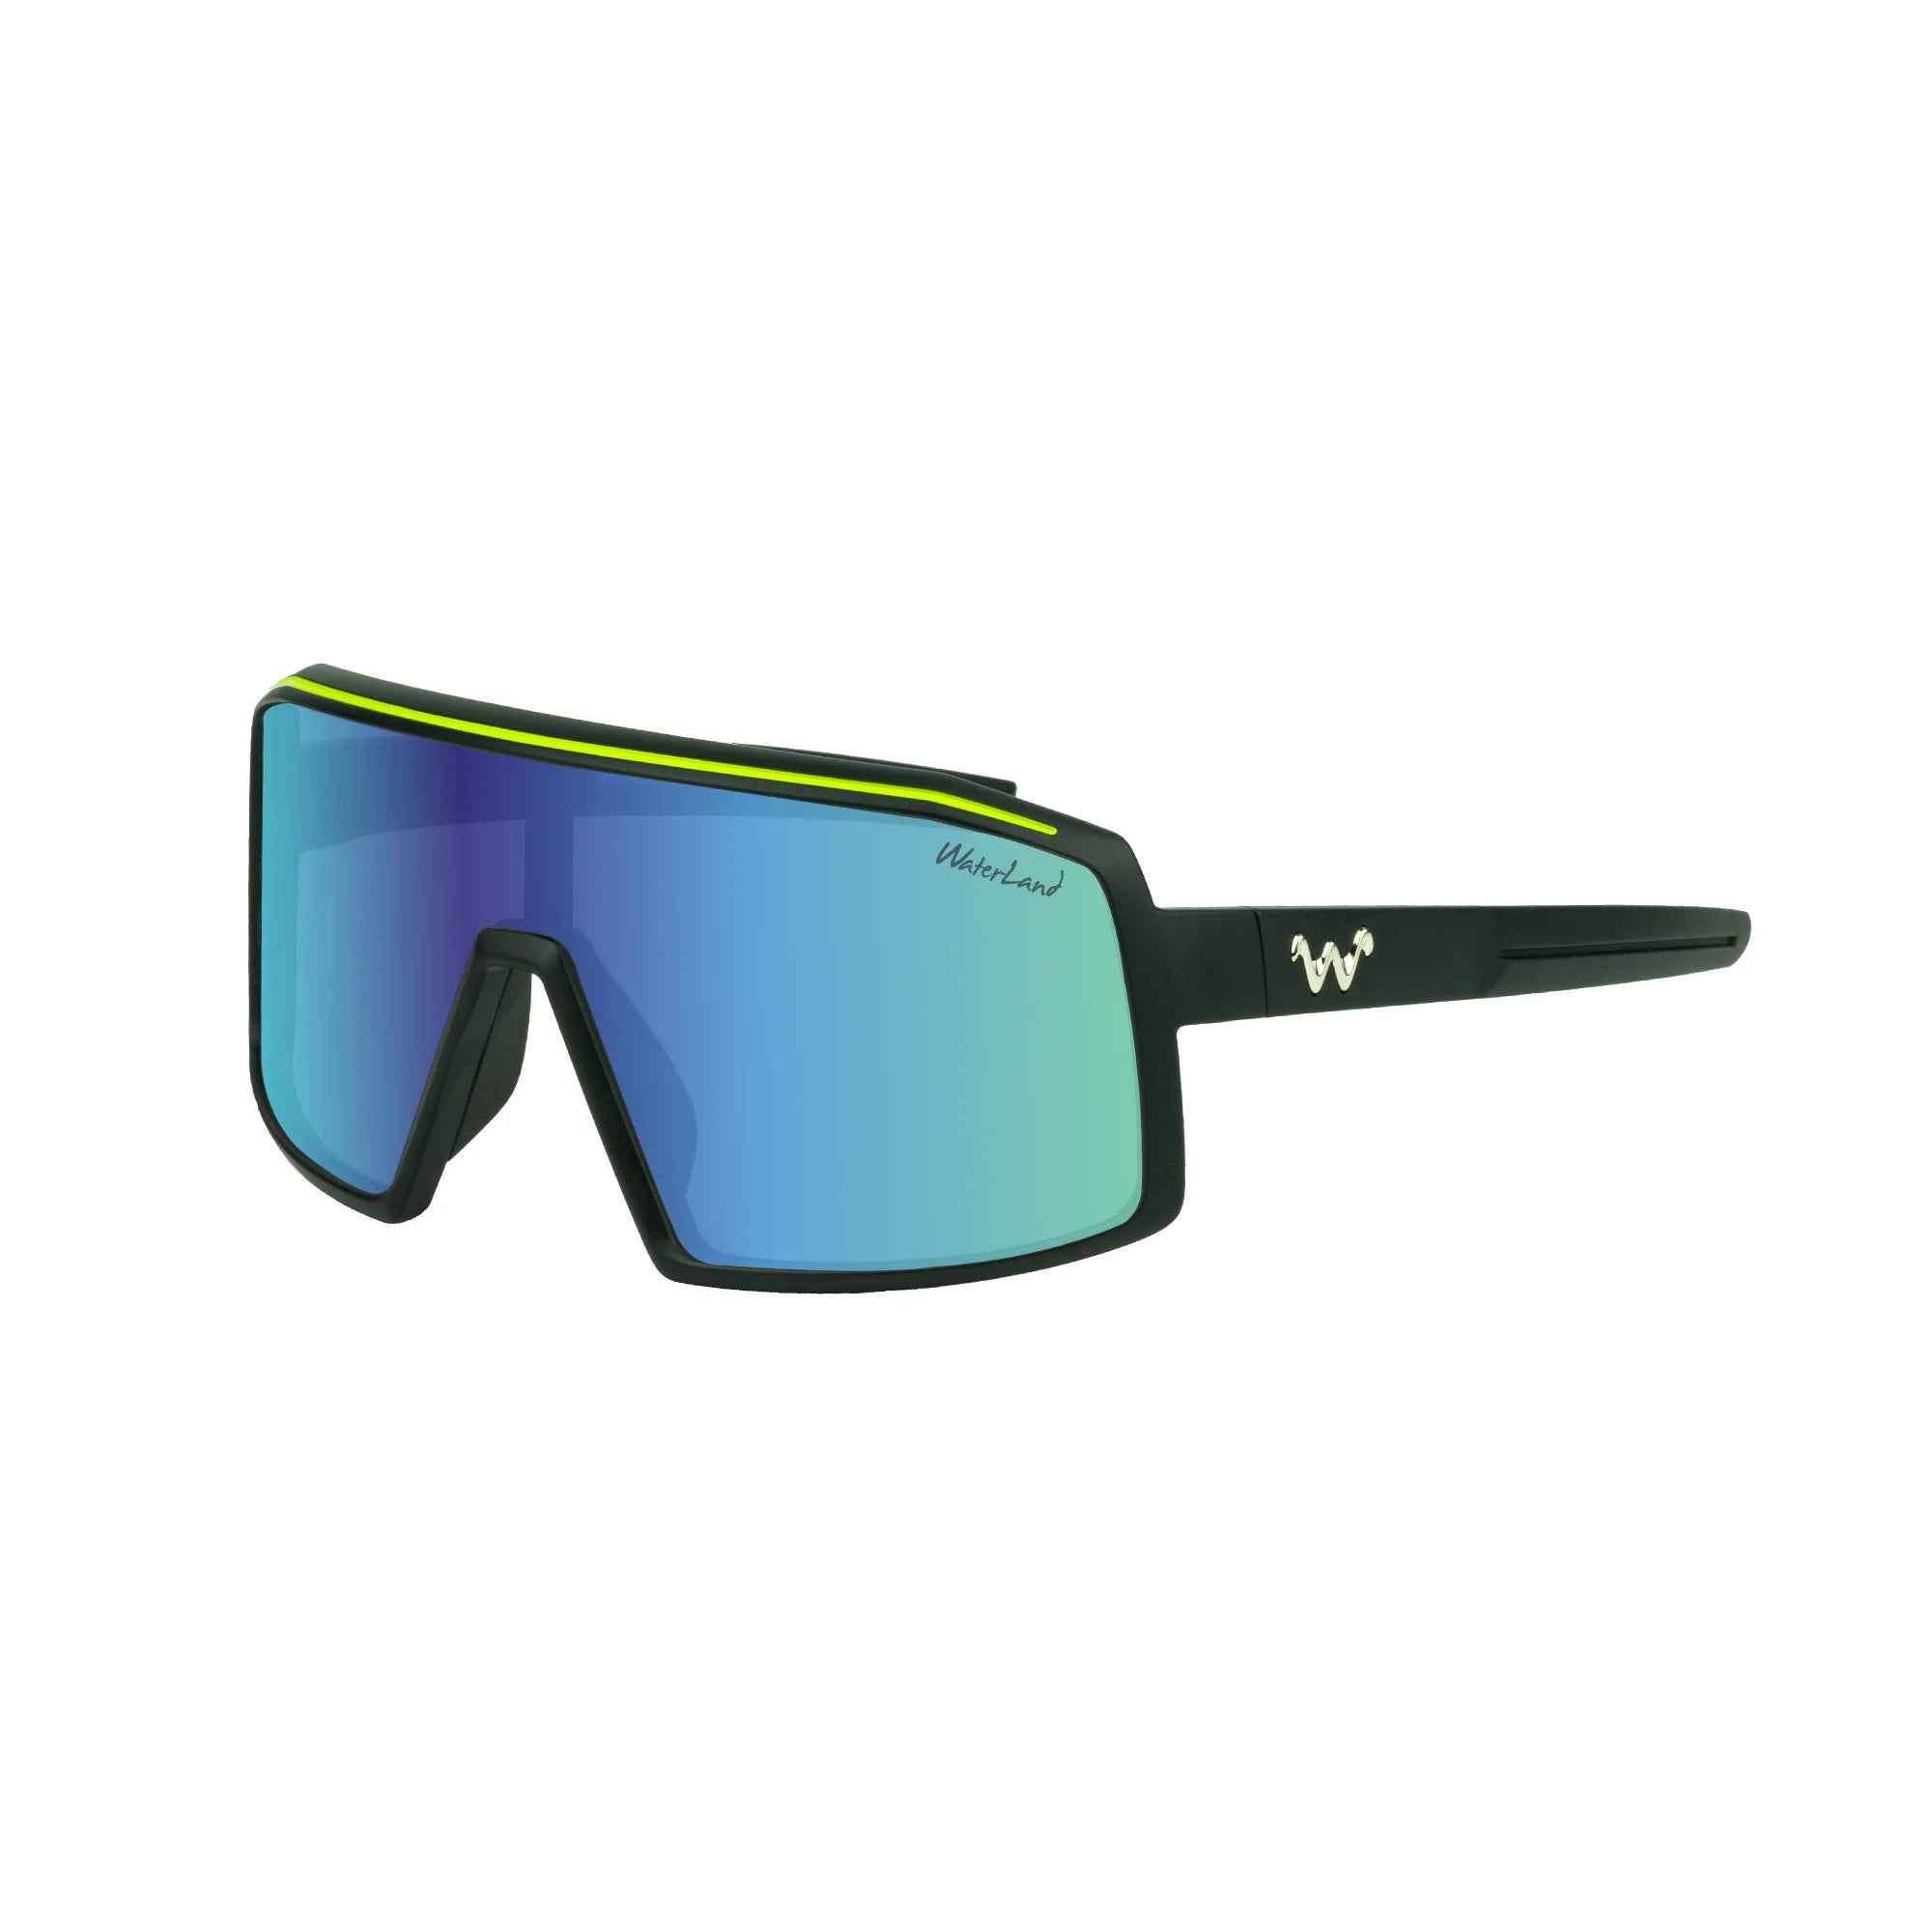 Waterland Fishing Sunglasses Cooker / Black / Green Mirror